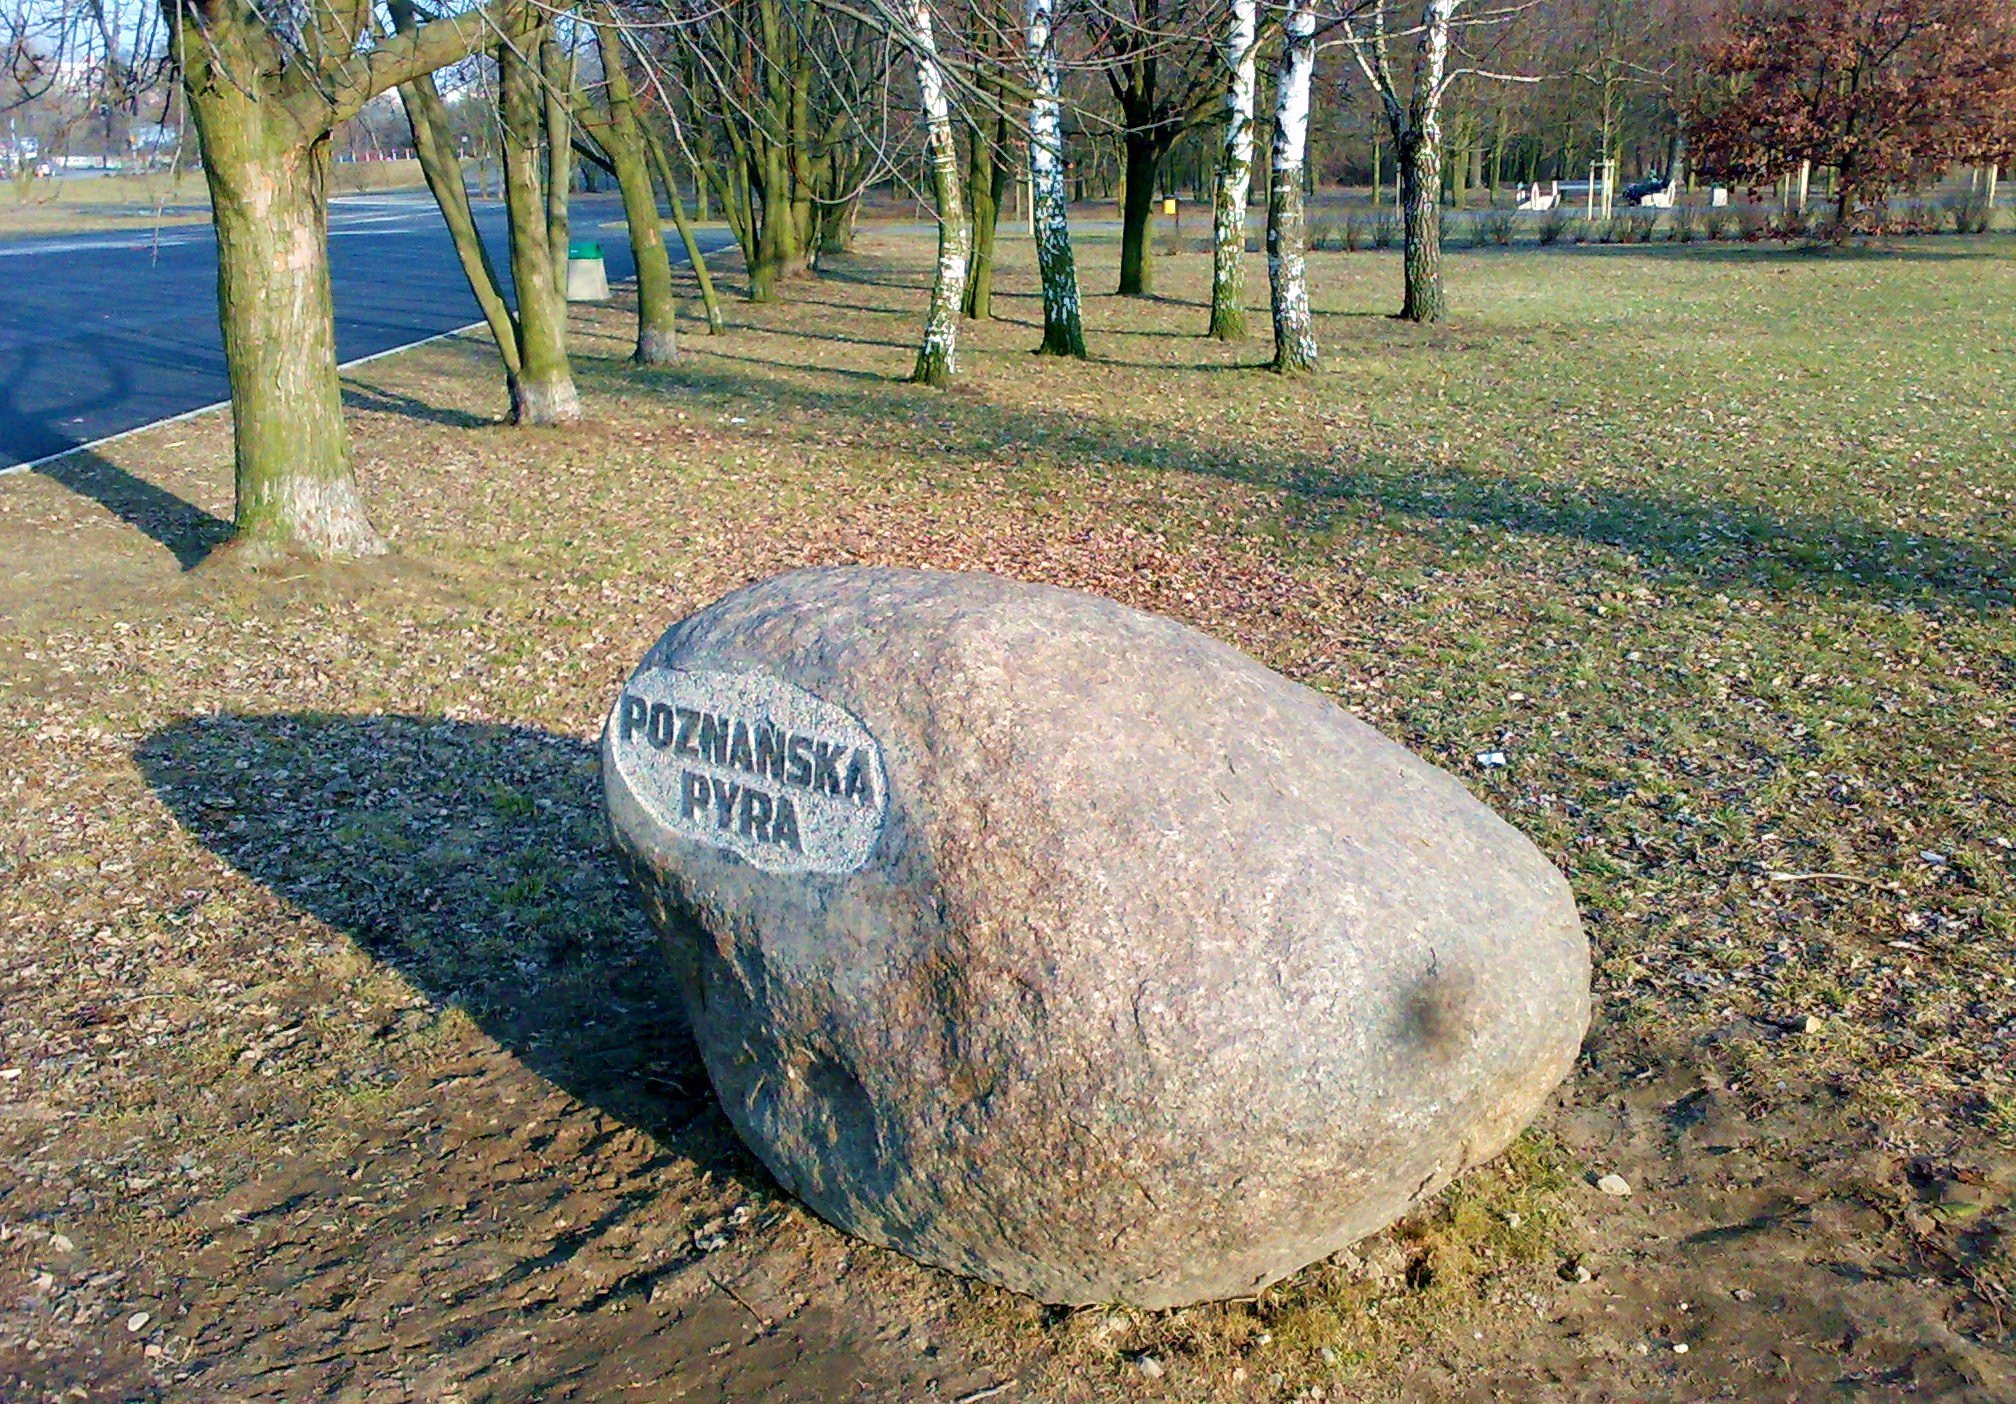 Pyra_Monument_Poznan.jpg